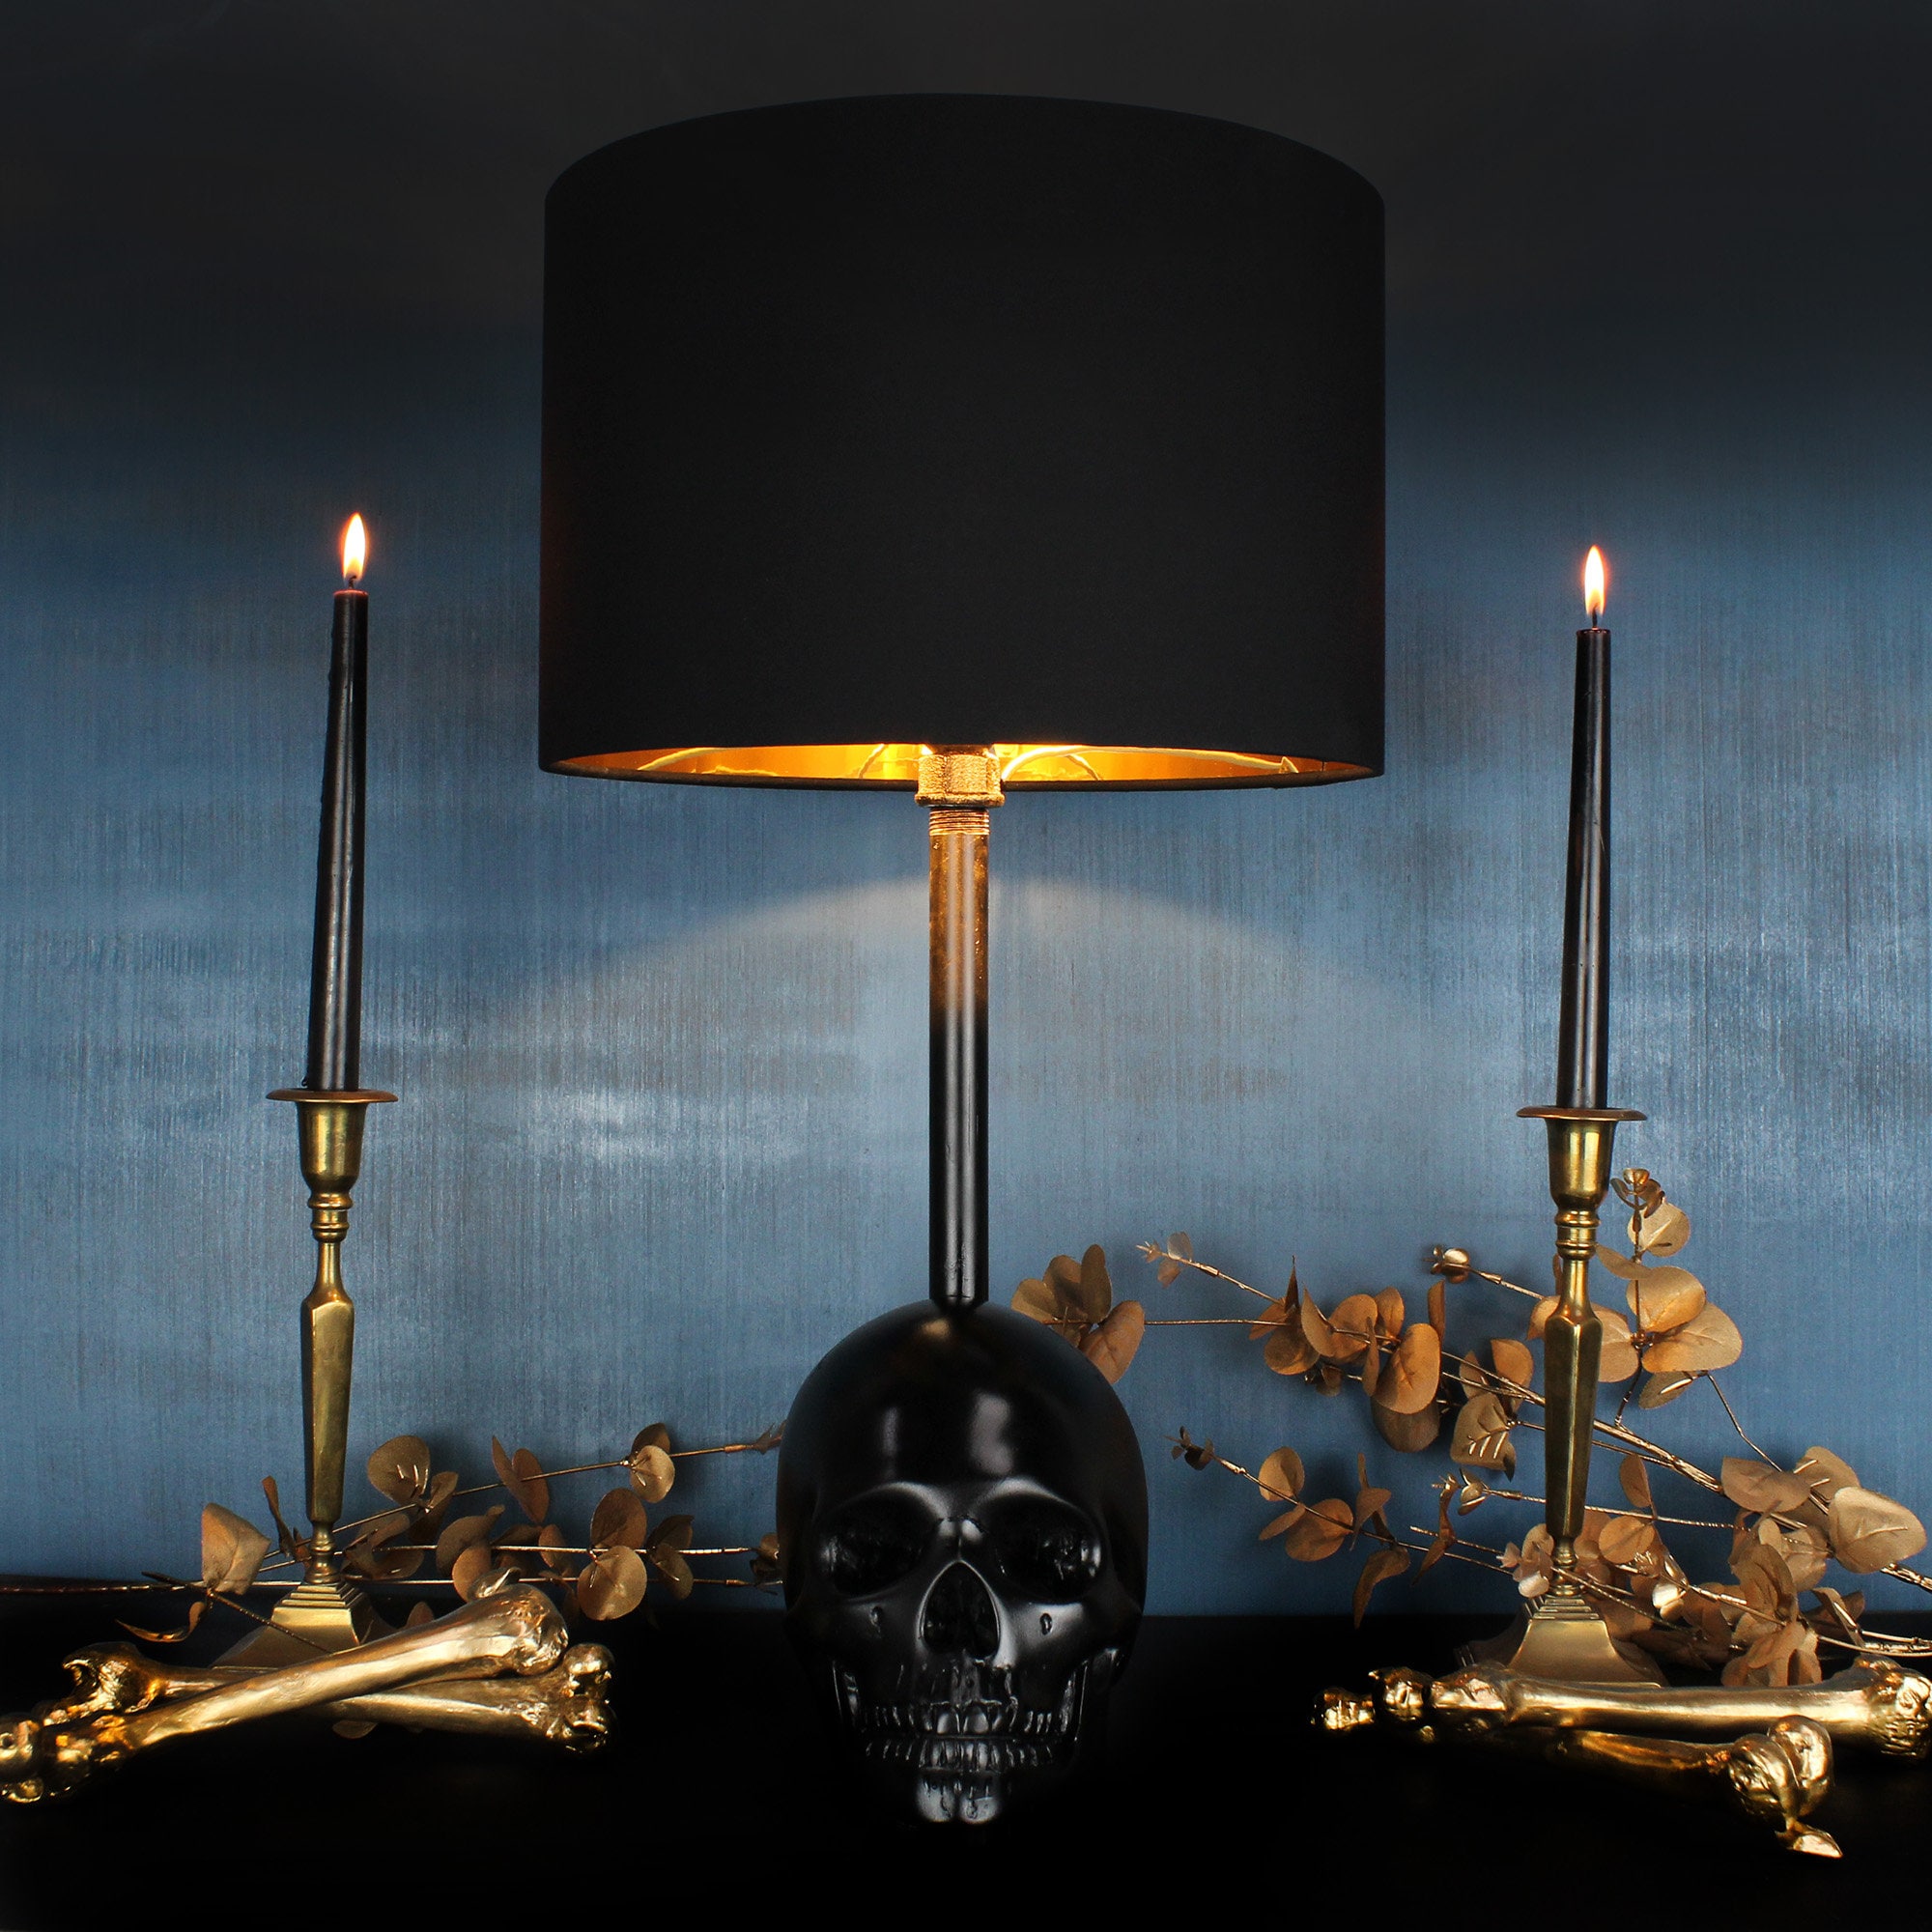 The Edison Skull Lamp Skull Decor by the Blackened Teeth Gothic